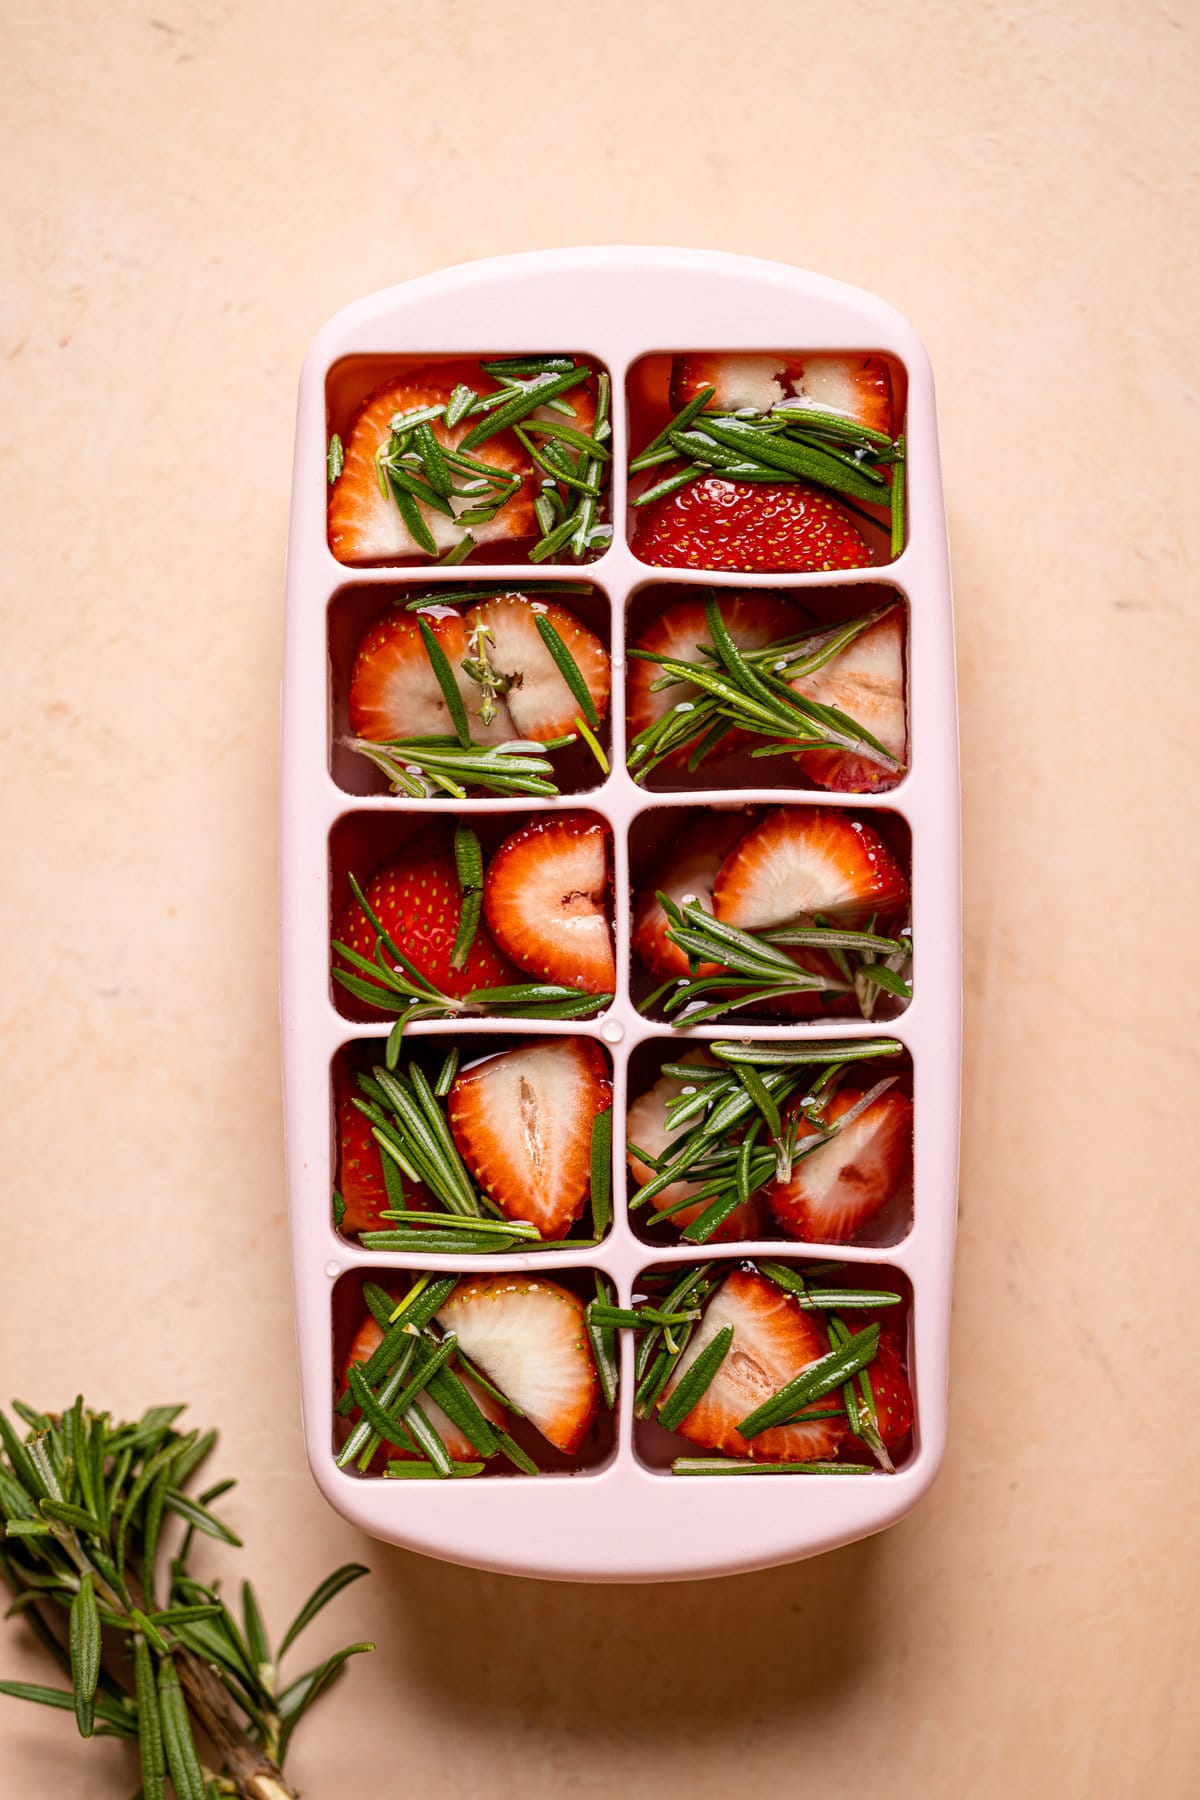 Tray of unfrozen strawberry-rosemary ice cubes